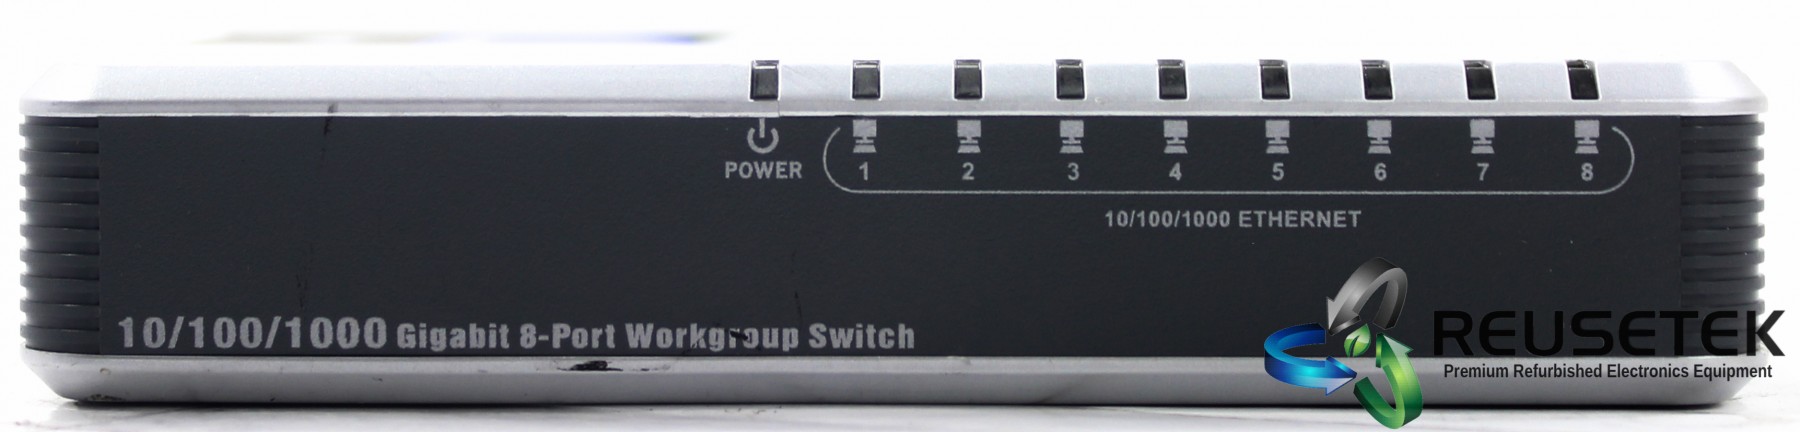 500030877-Cisco Linksys EG008W ver. 3 Gigabit 8-Port Workgroup Switch-image